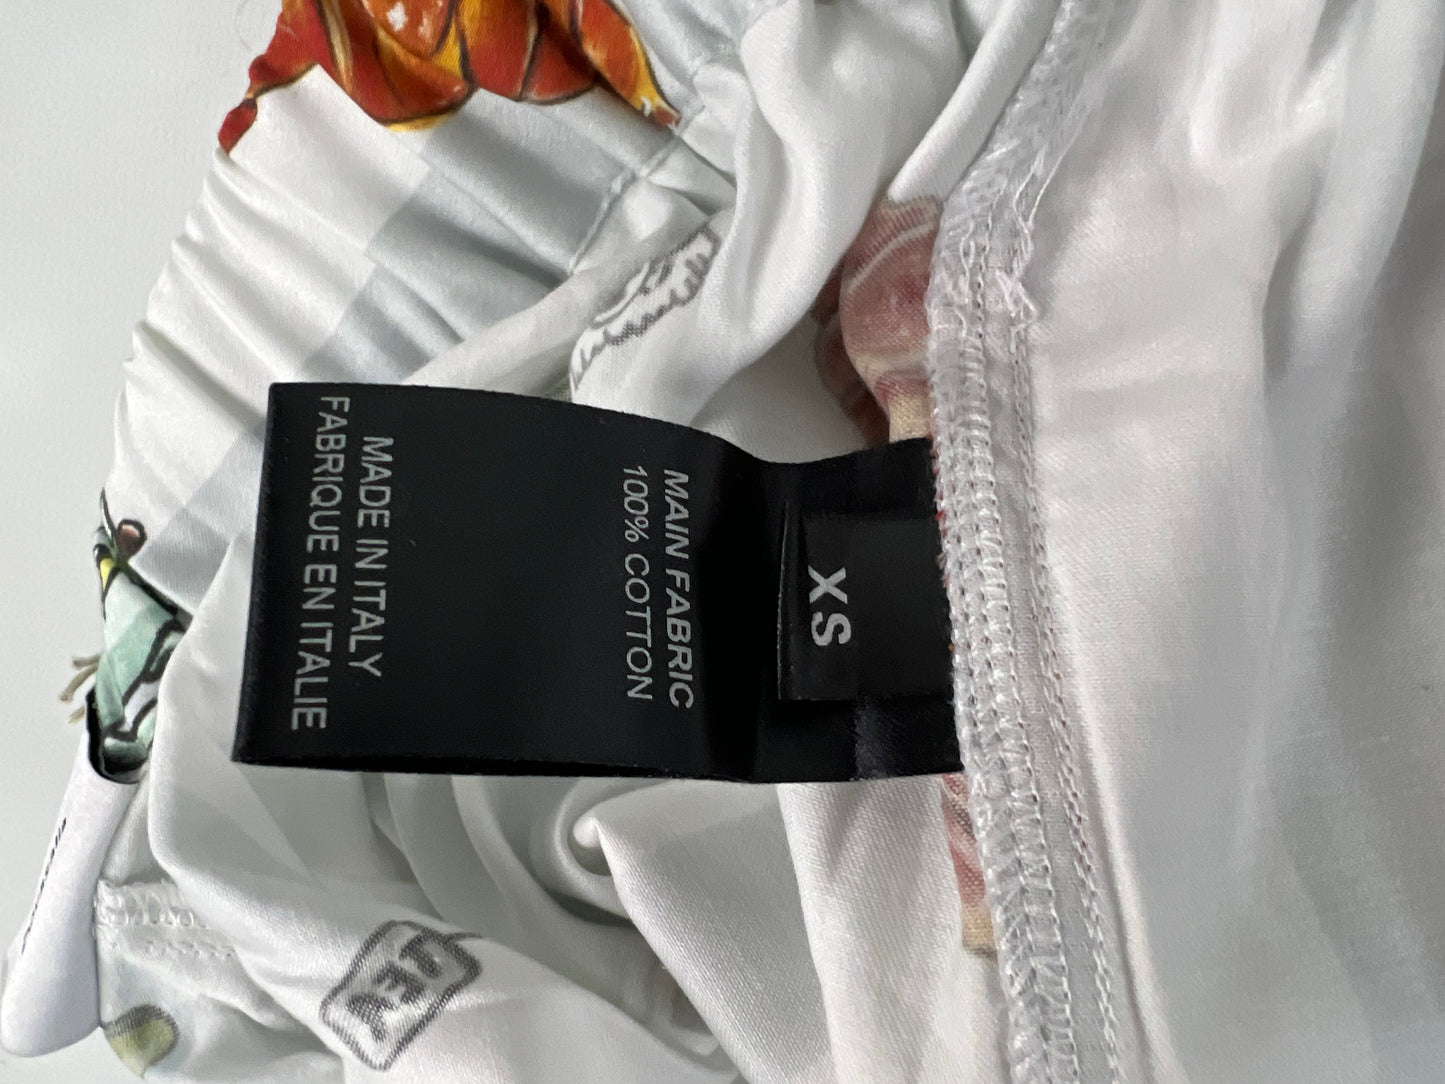 Vetements AW19 Pyjama runway breakfast pants in grey white SZ:XS|S